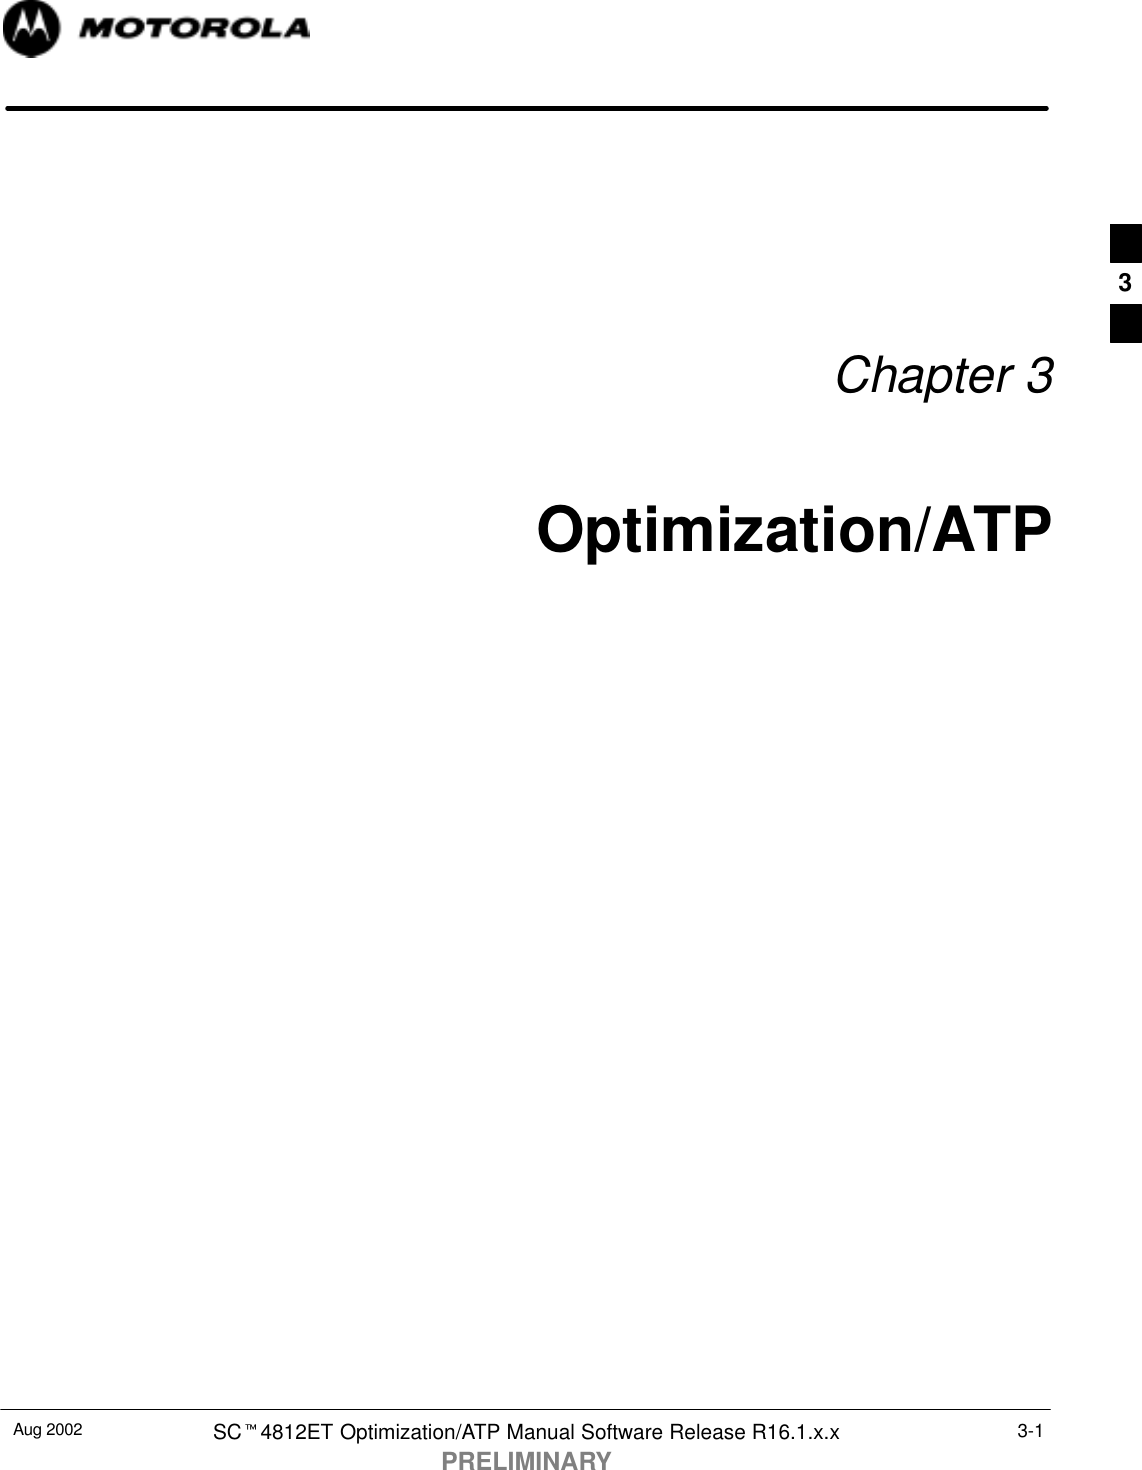 Aug 2002 SCt4812ET Optimization/ATP Manual Software Release R16.1.x.xPRELIMINARY3-1Chapter 3Optimization/ATP3